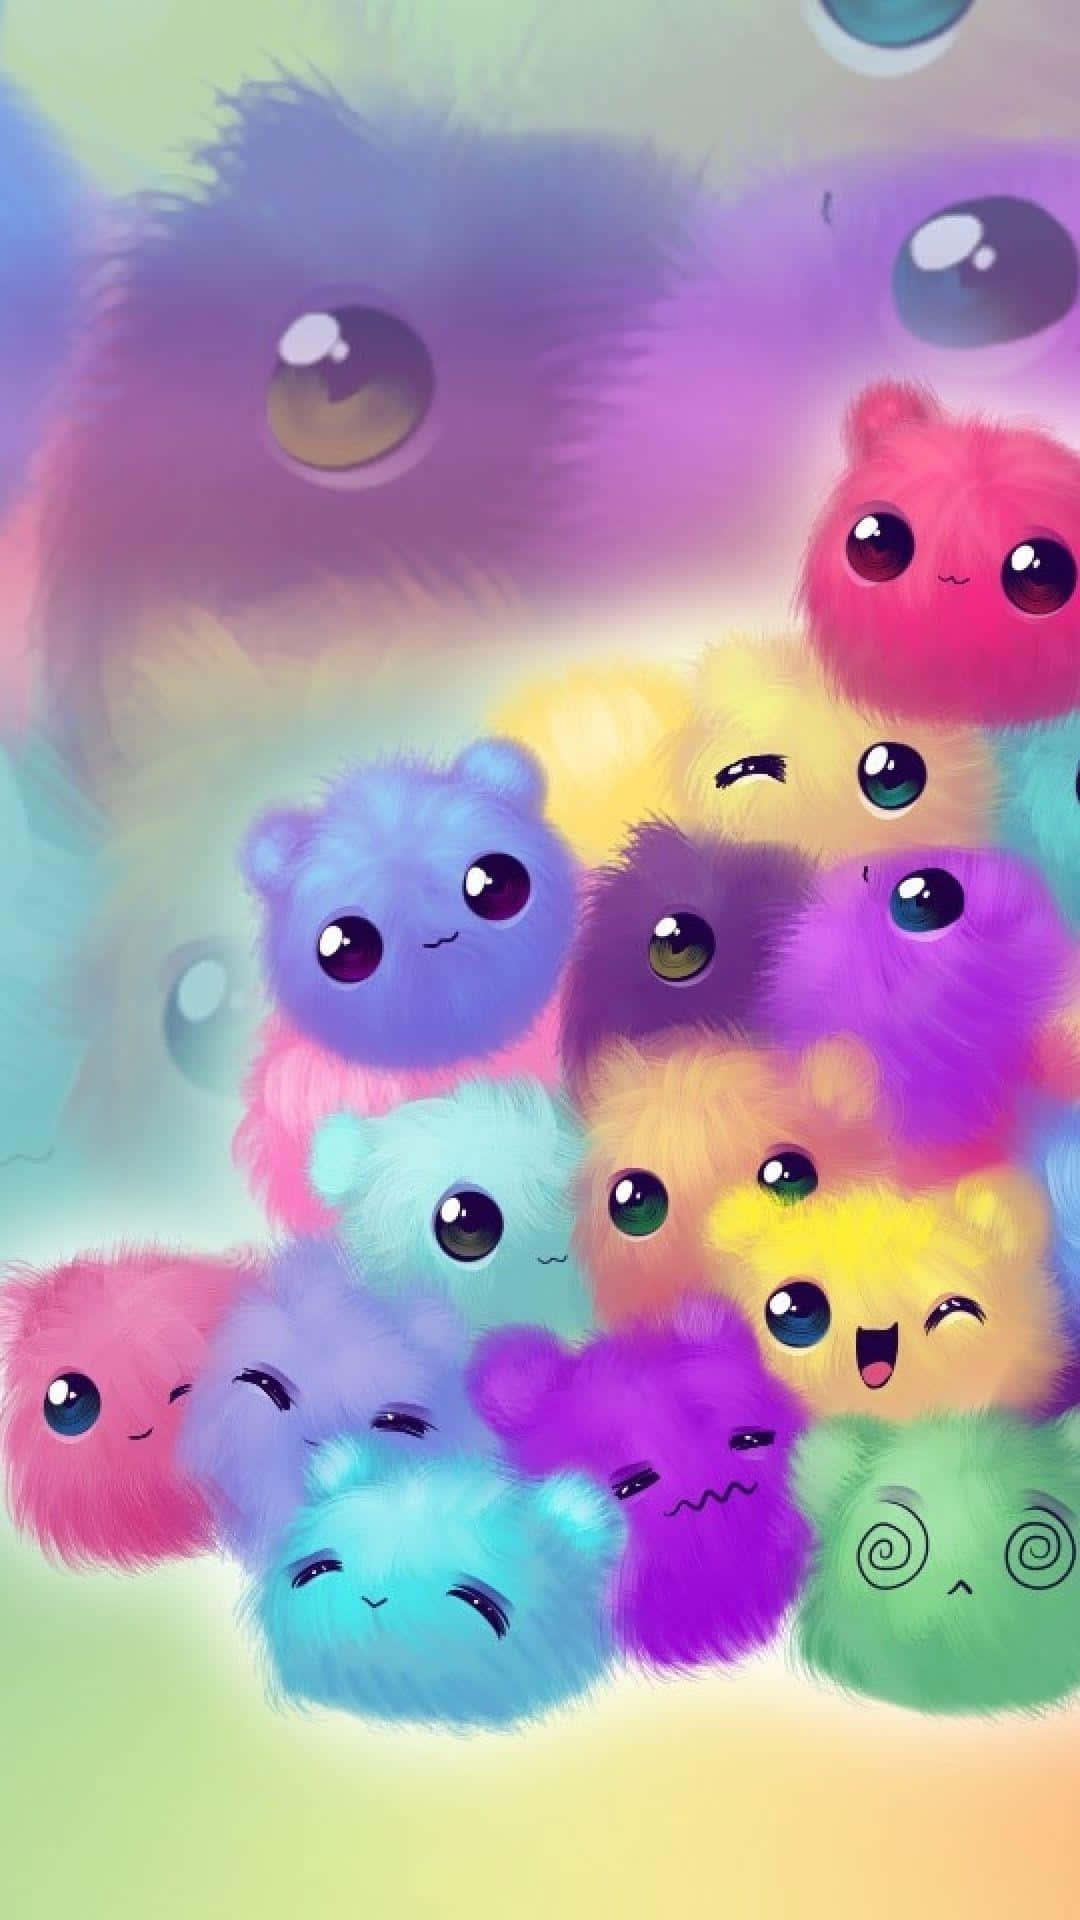 100+] Cute Phone Backgrounds